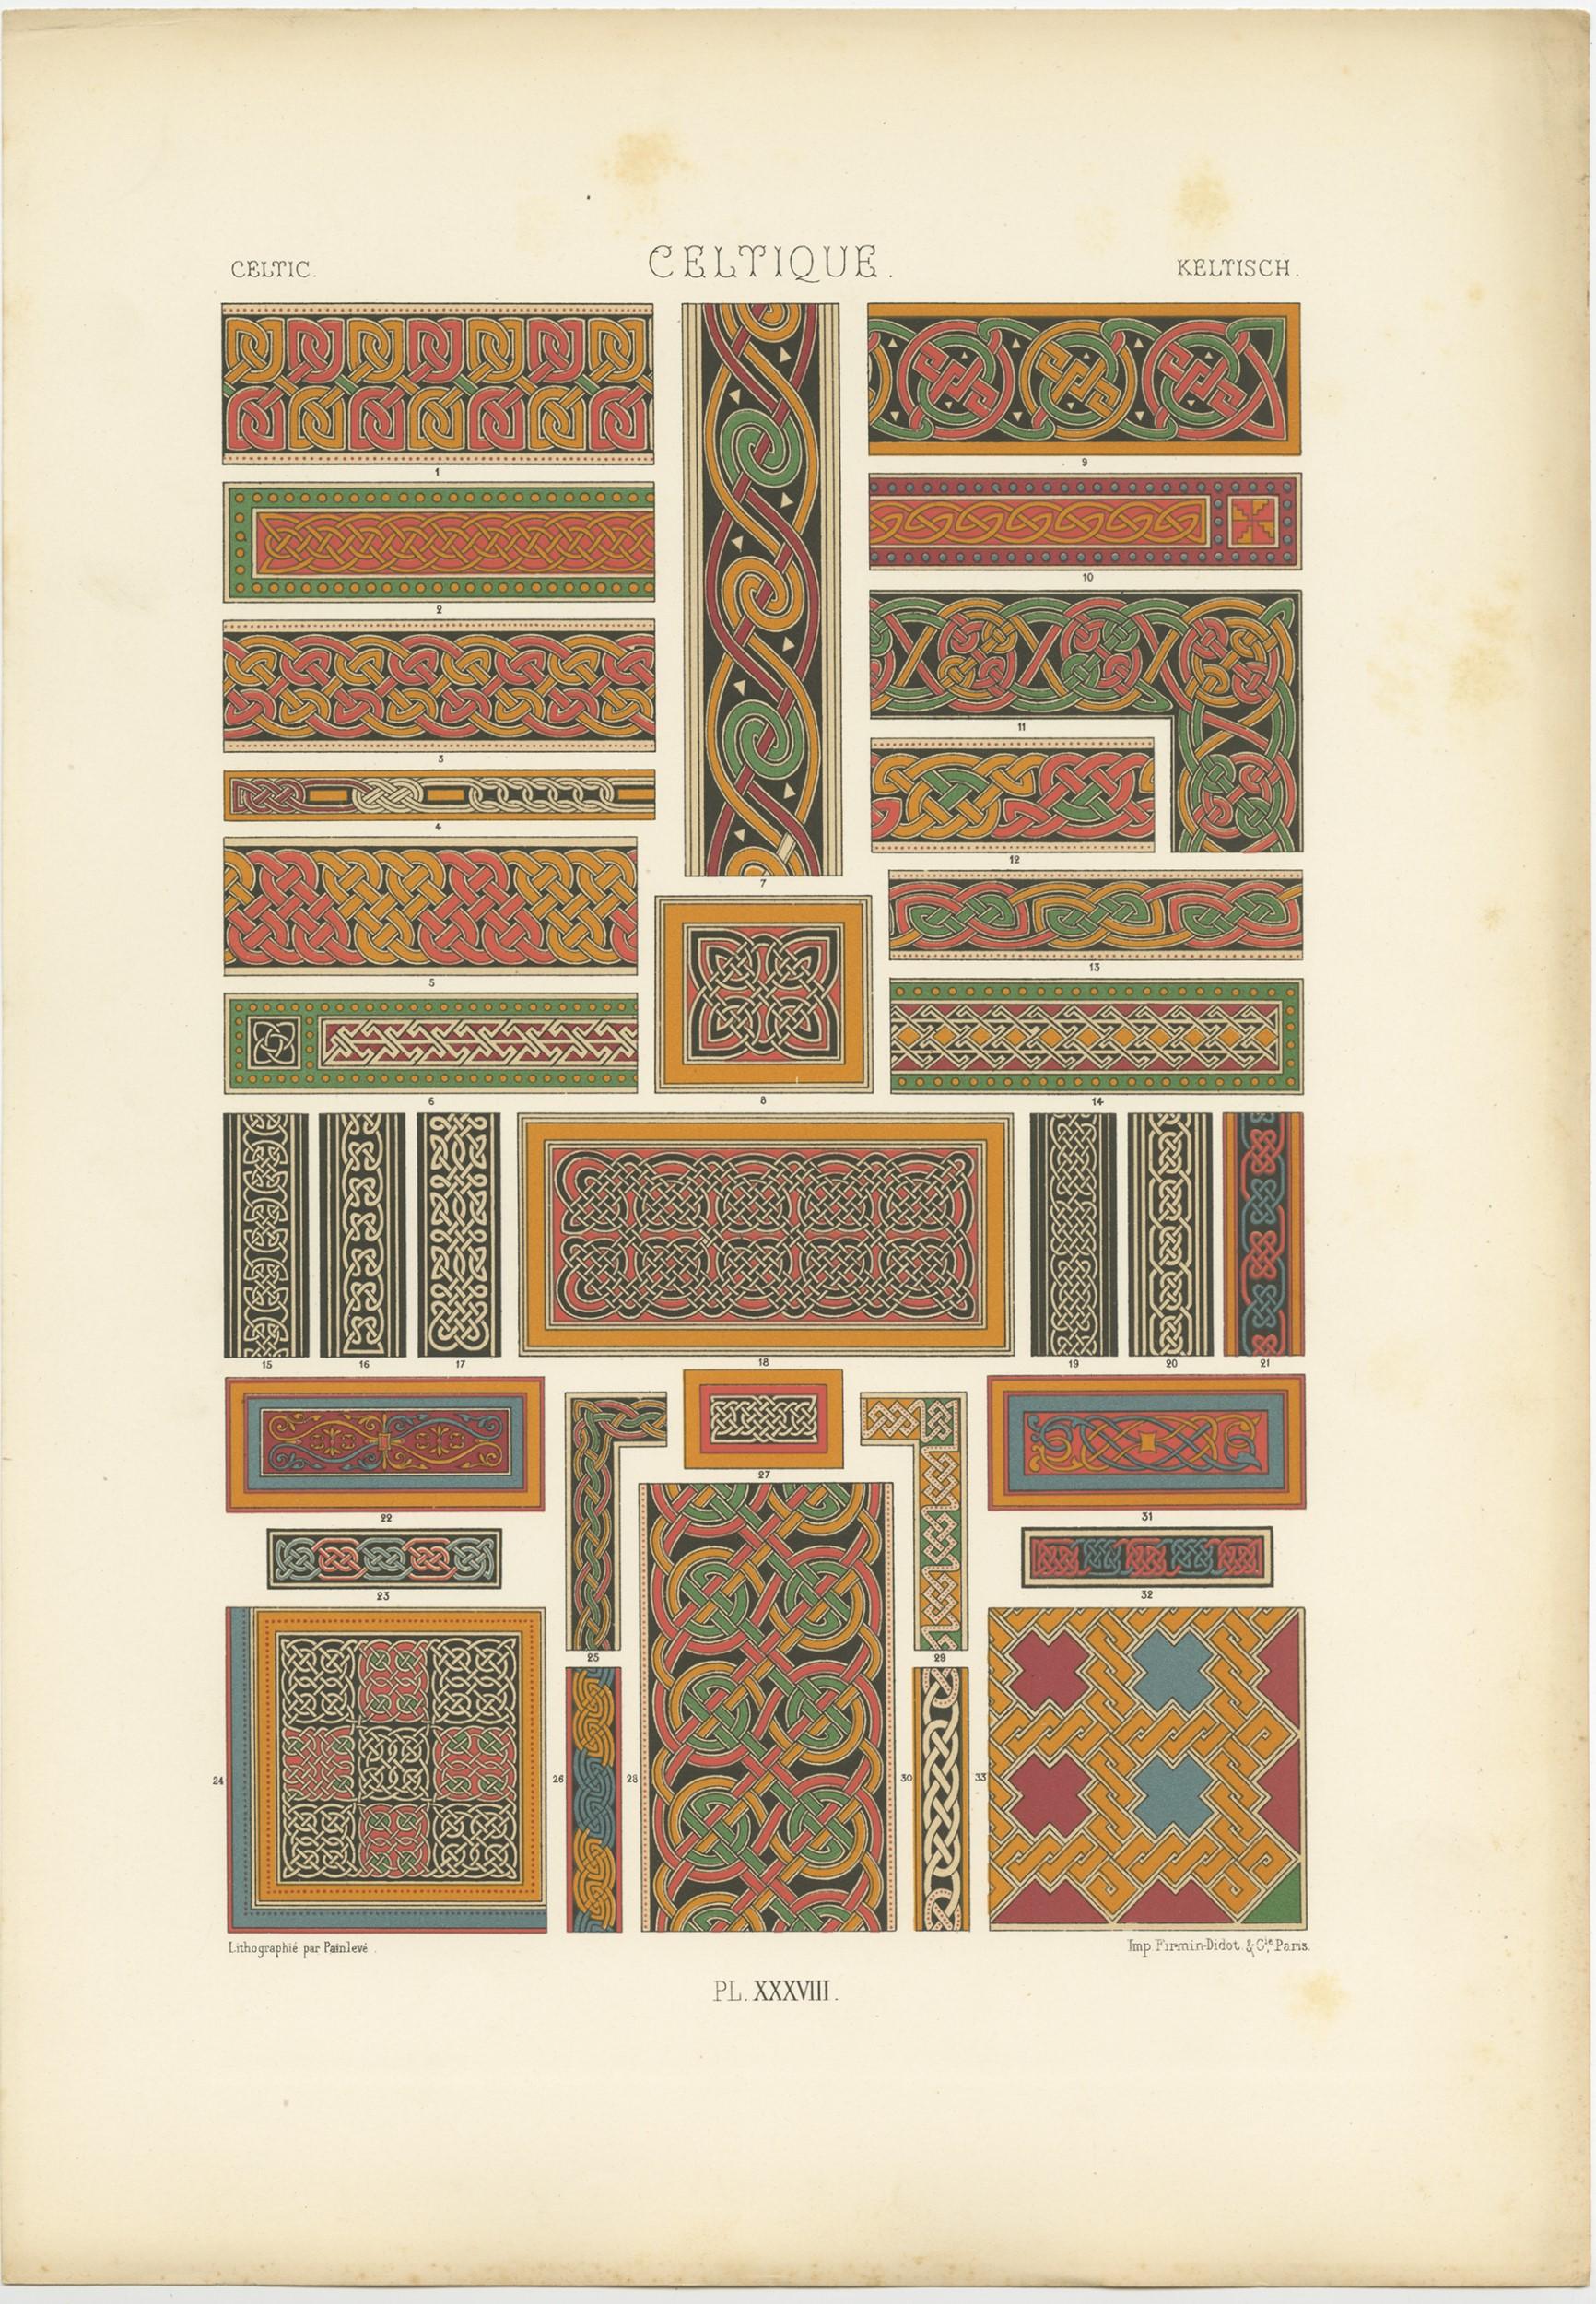 Antique print titled 'Celtic - Celtique - Keltisch'. Chromolithograph of Celtic ornaments and decorative arts. This print originates from 'l'Ornement Polychrome' by Auguste Racinet. Published, circa 1890.